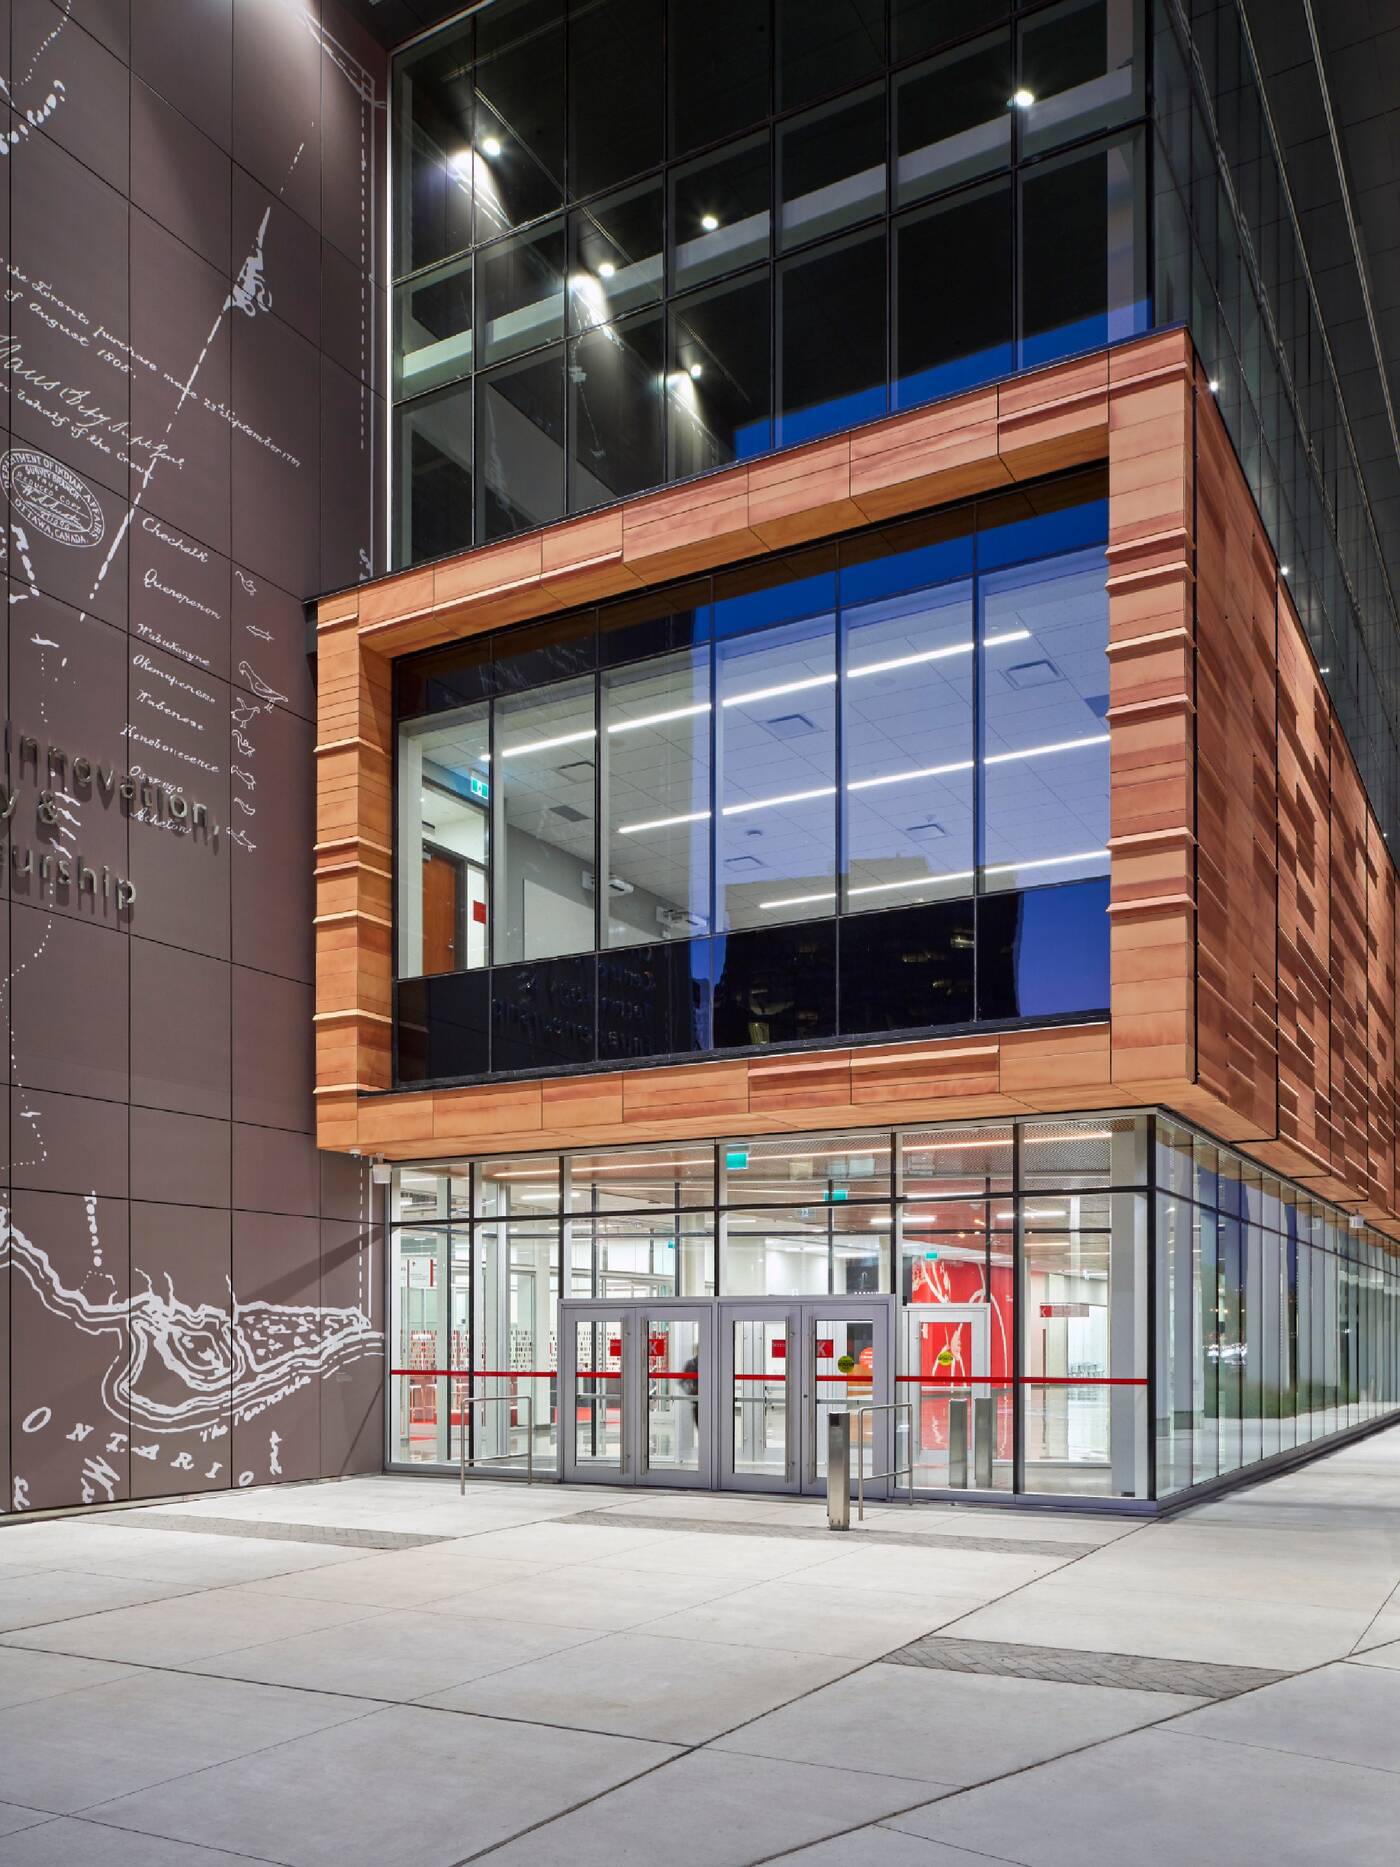 Events in toronto Seneca College unveils new building in Toronto with